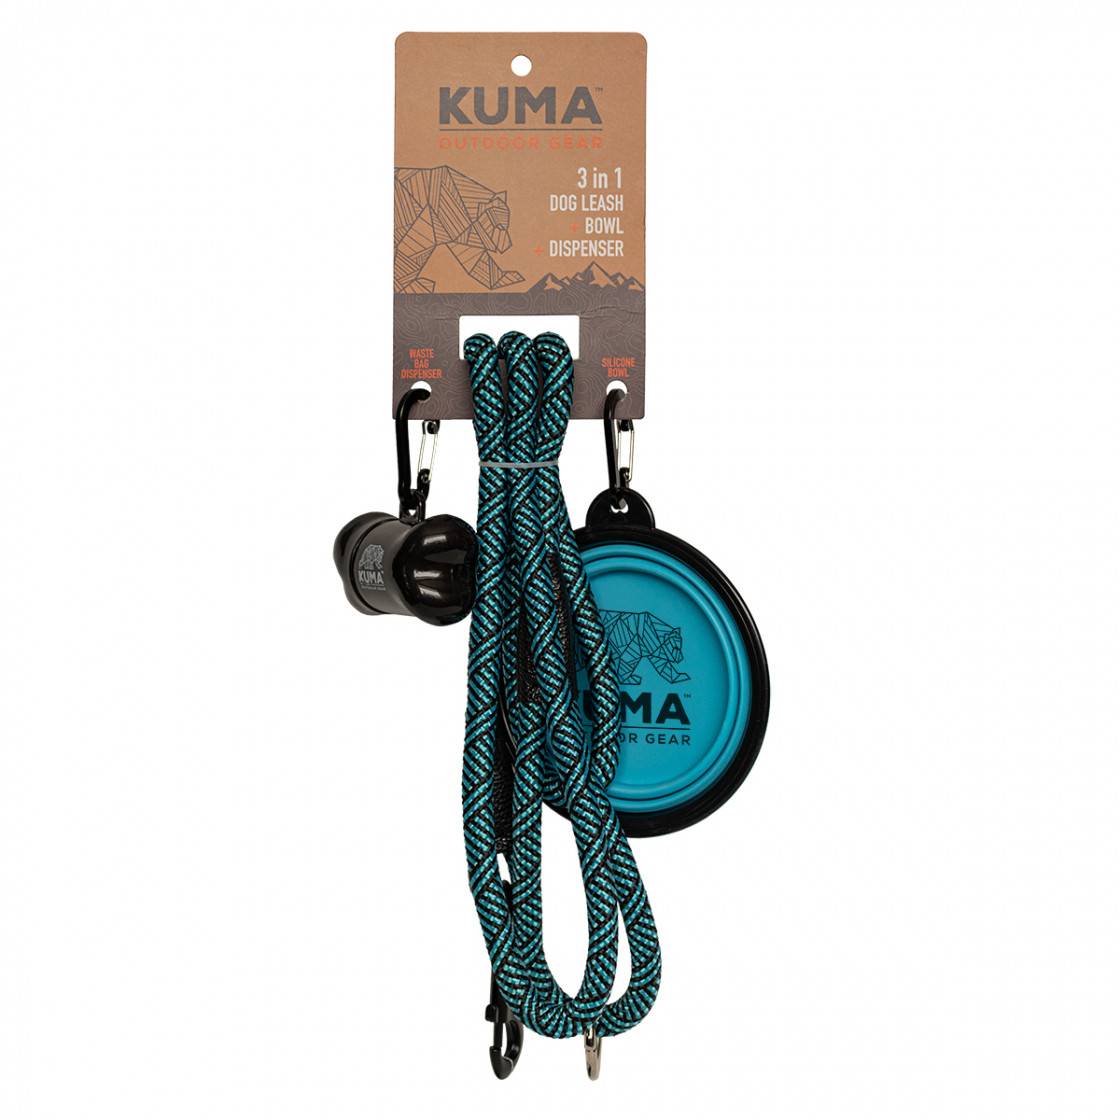 Kuma Outdoor Gear Qualifies for Free Shipping Kuma Outdoor Gear 3-In-1 Dog Leash Aqua/Black #KM-31DL-AB